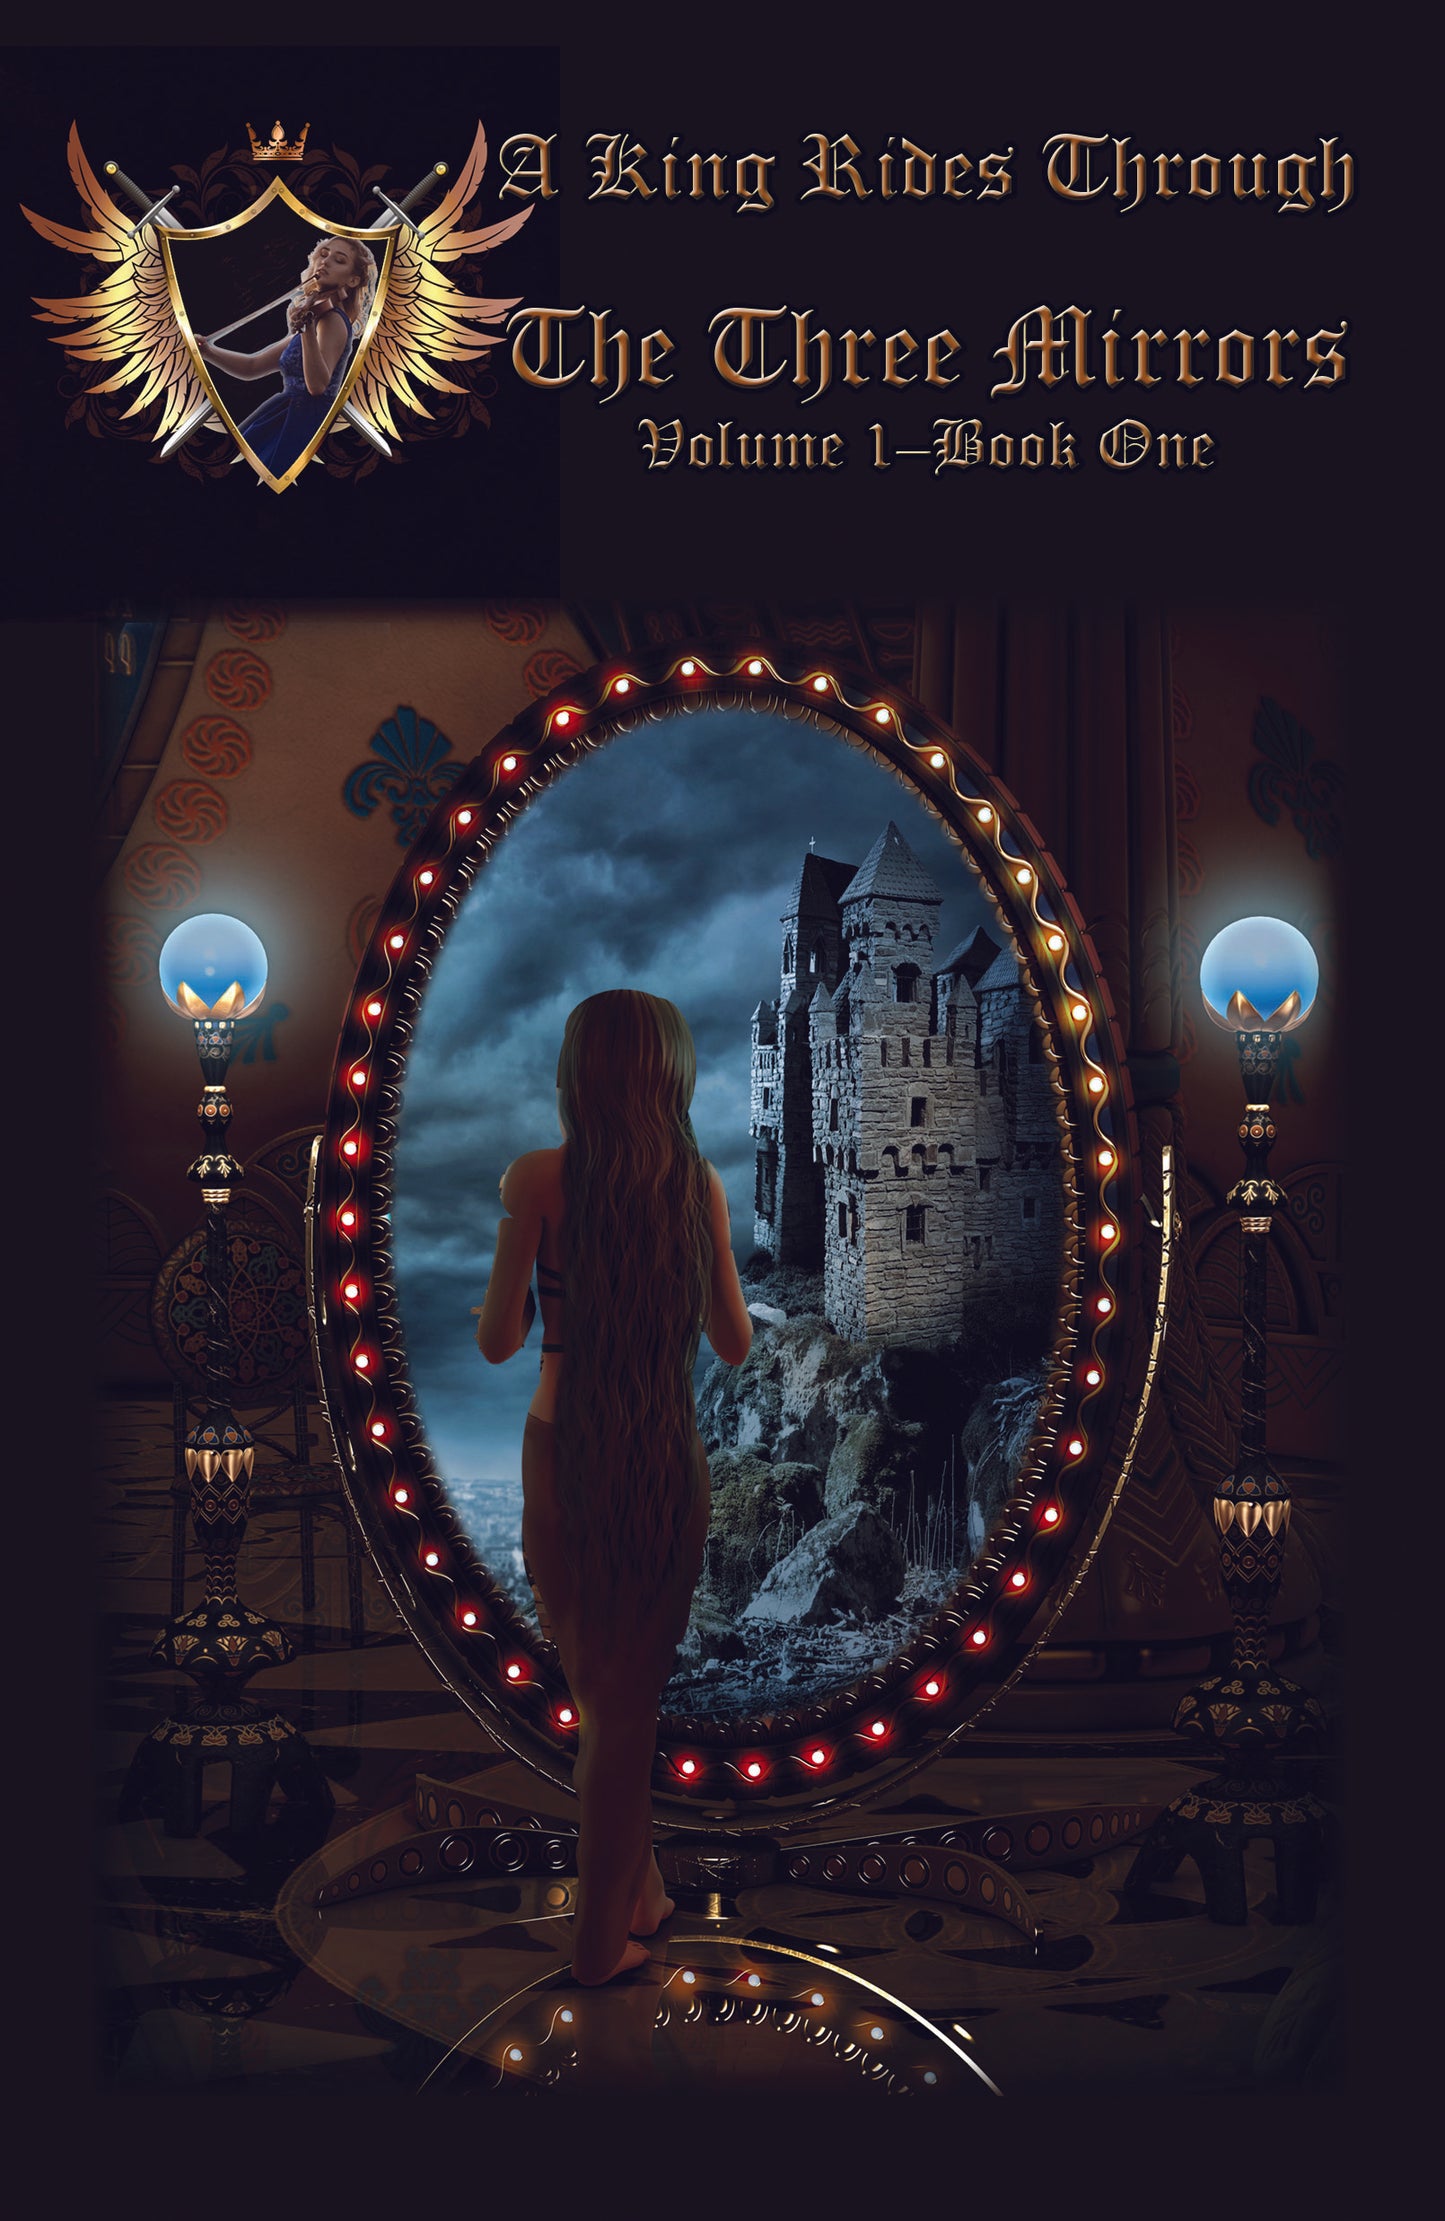 The Three Mirrors, A King Rides Through, Volume 1, Book One